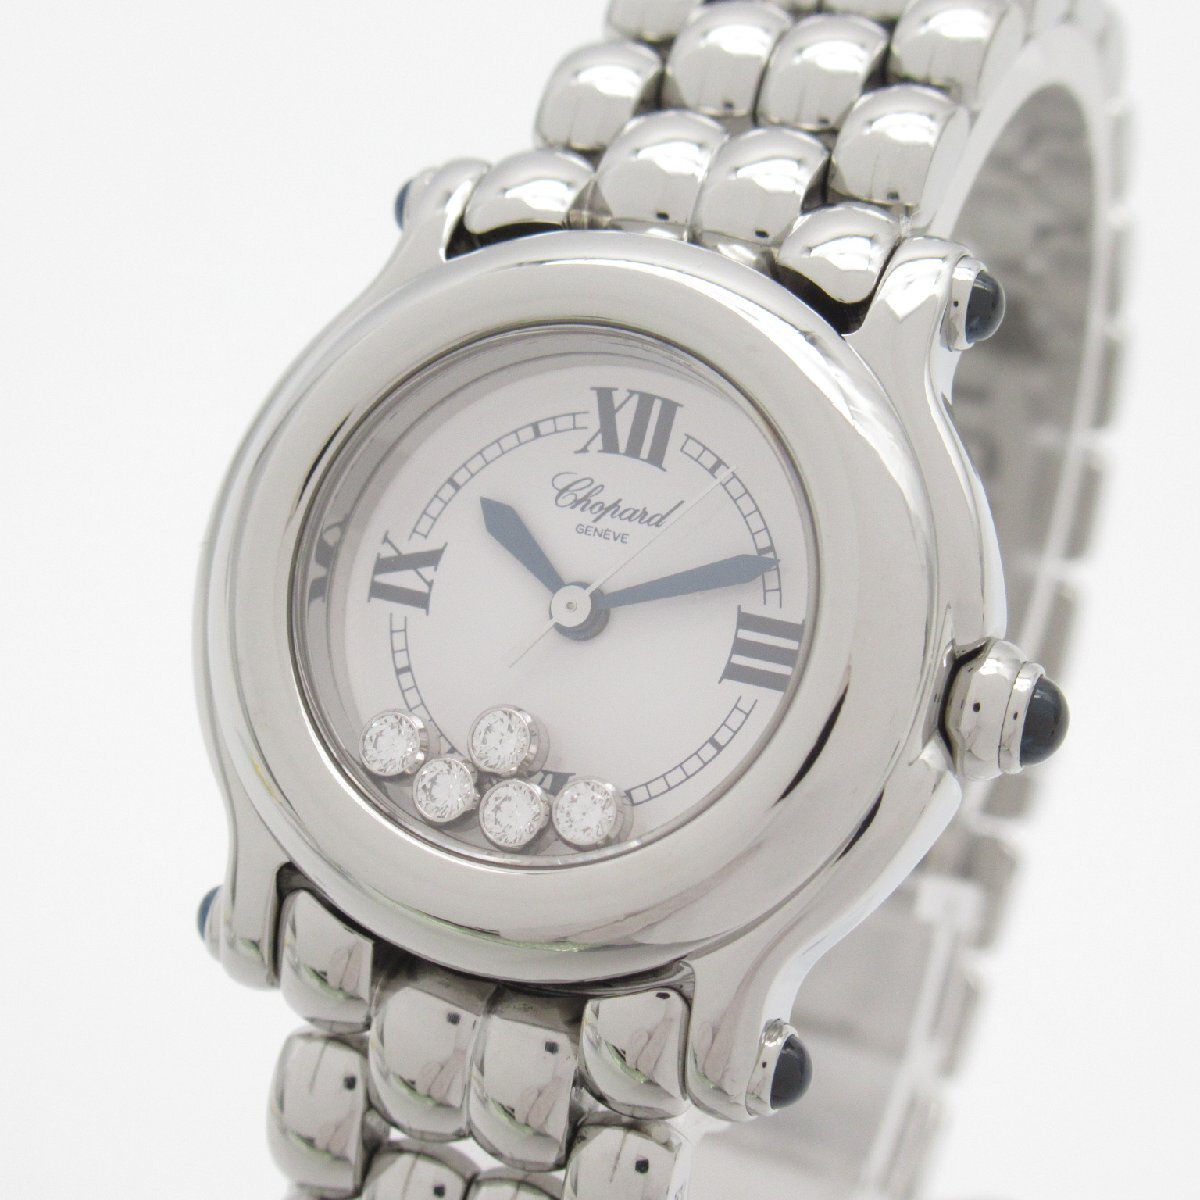  Chopard happy спорт наручные часы часы бренд off Chopard нержавеющая сталь наручные часы SS б/у женский 